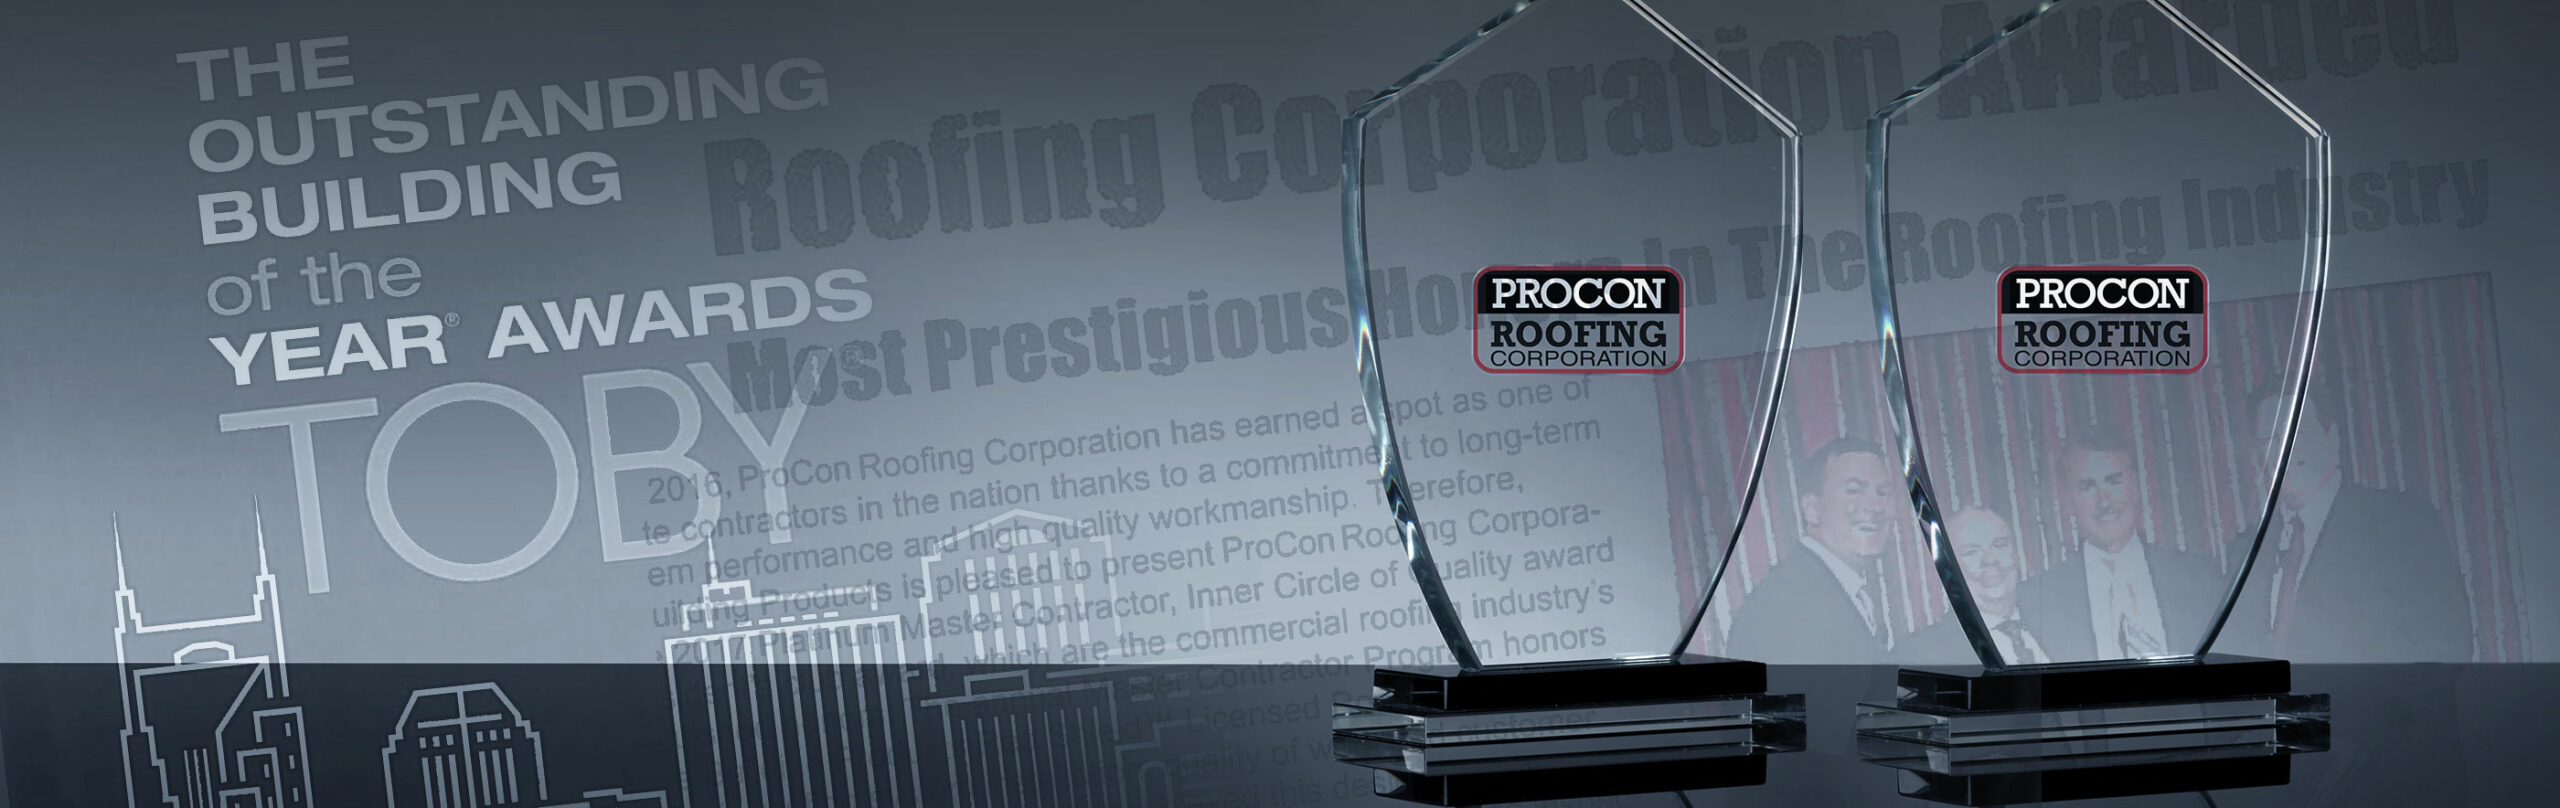 ProCon Roofing Corporation prestigious USA award winners